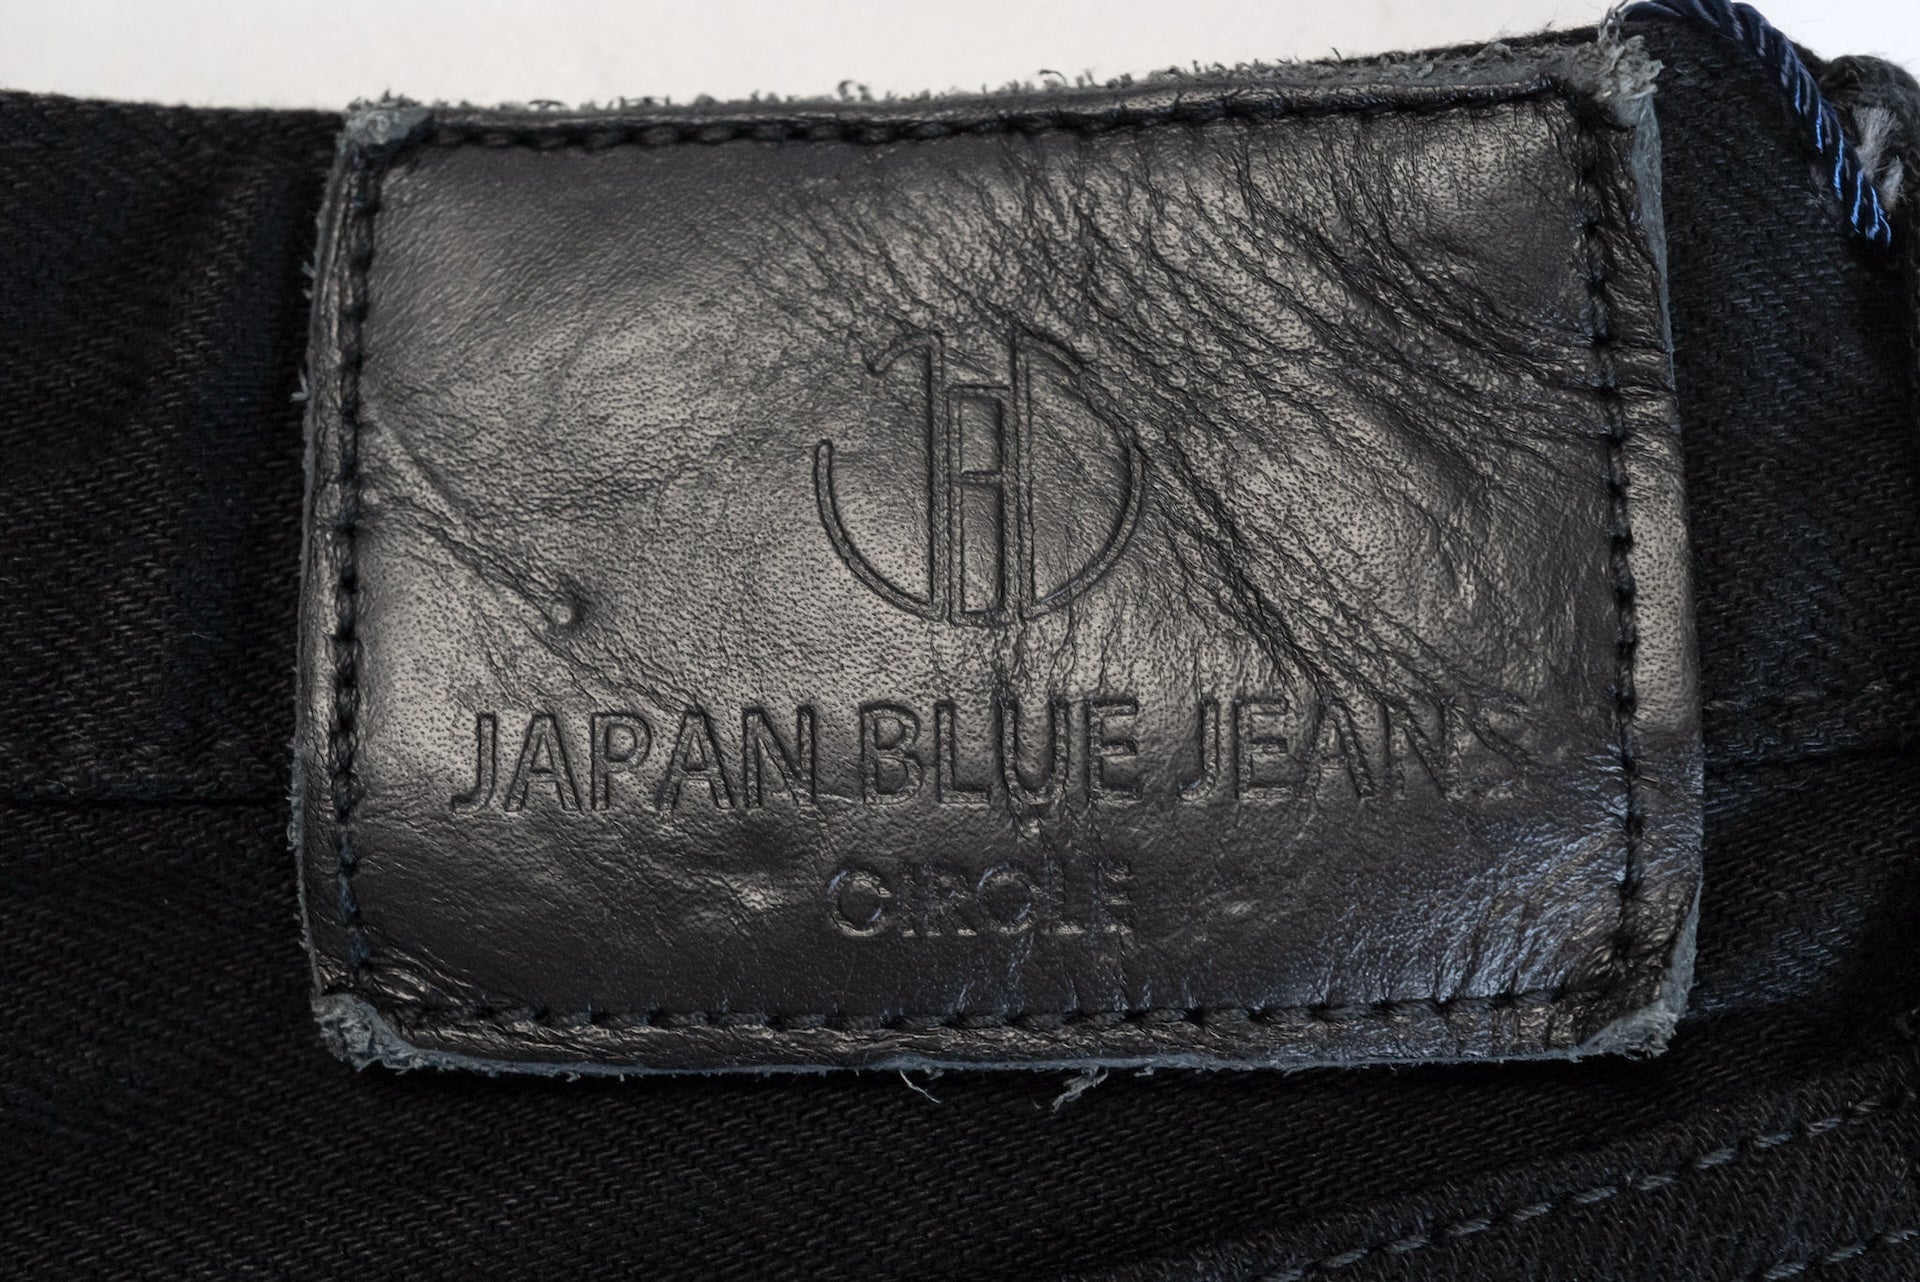 Japan Blue 14oz Double Black 'Circle' Denim (Slim Tapered Fit)